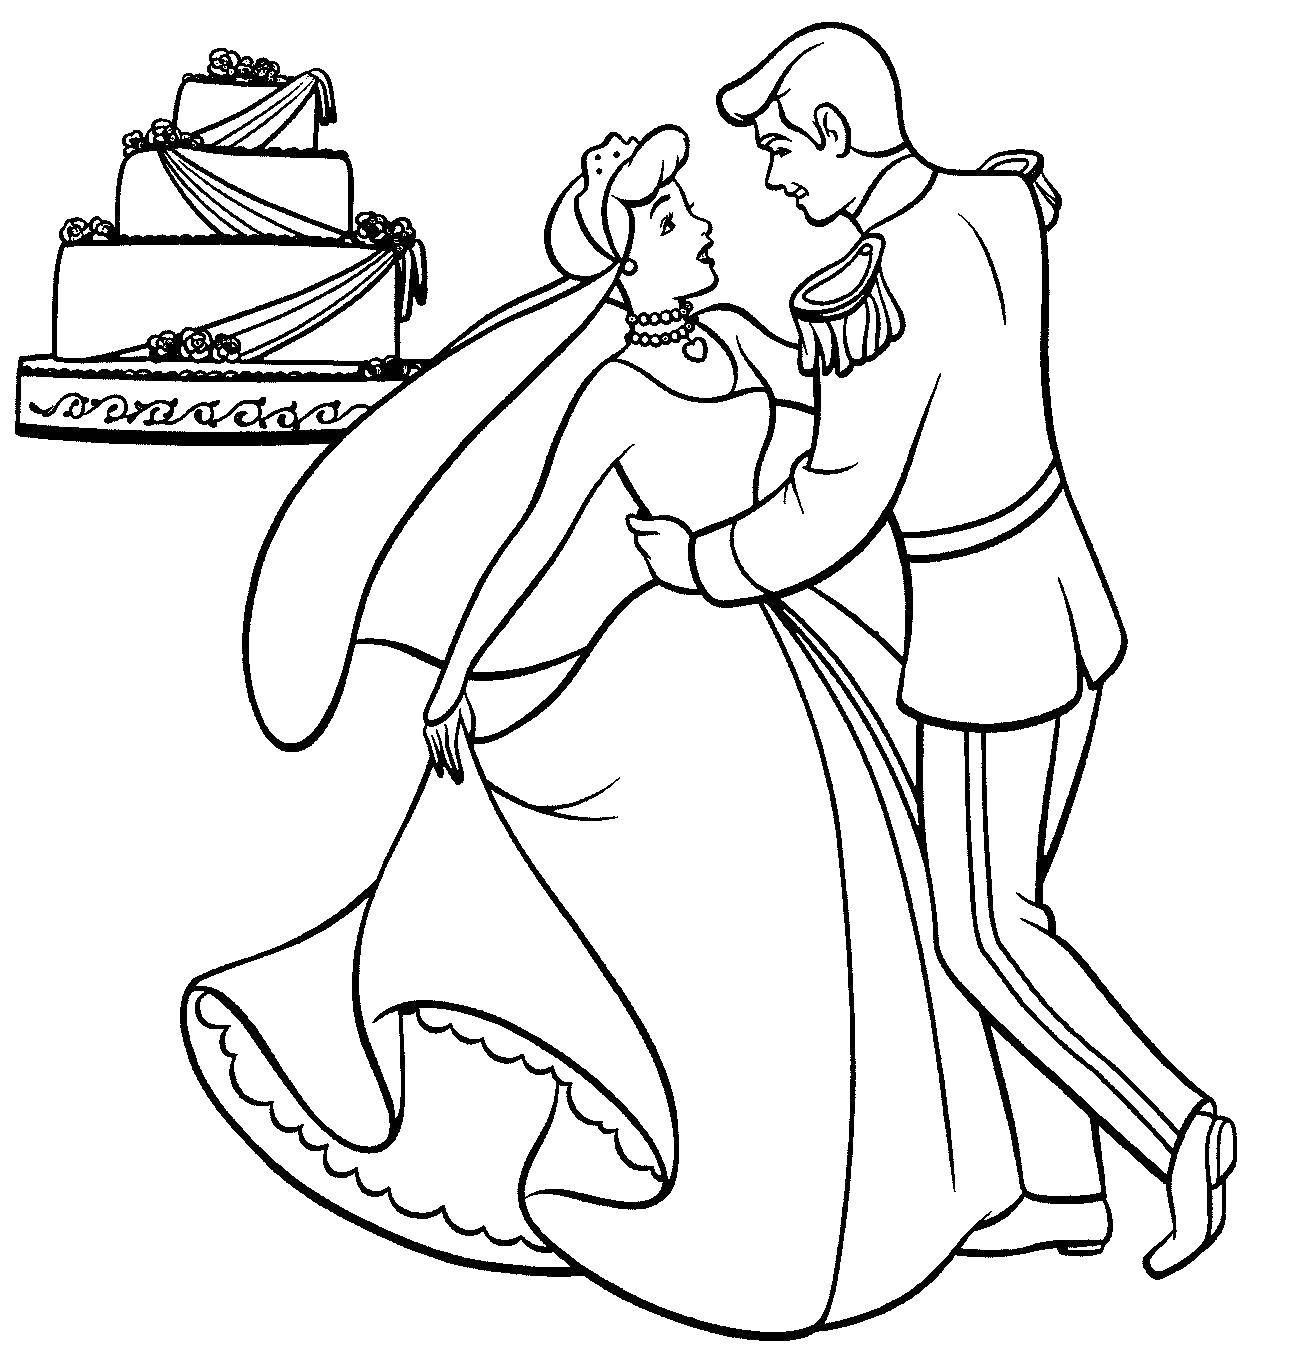 Coloring Cinderella and the Prince. Category Disney cartoons. Tags:  Cinderella, Prince, cake.